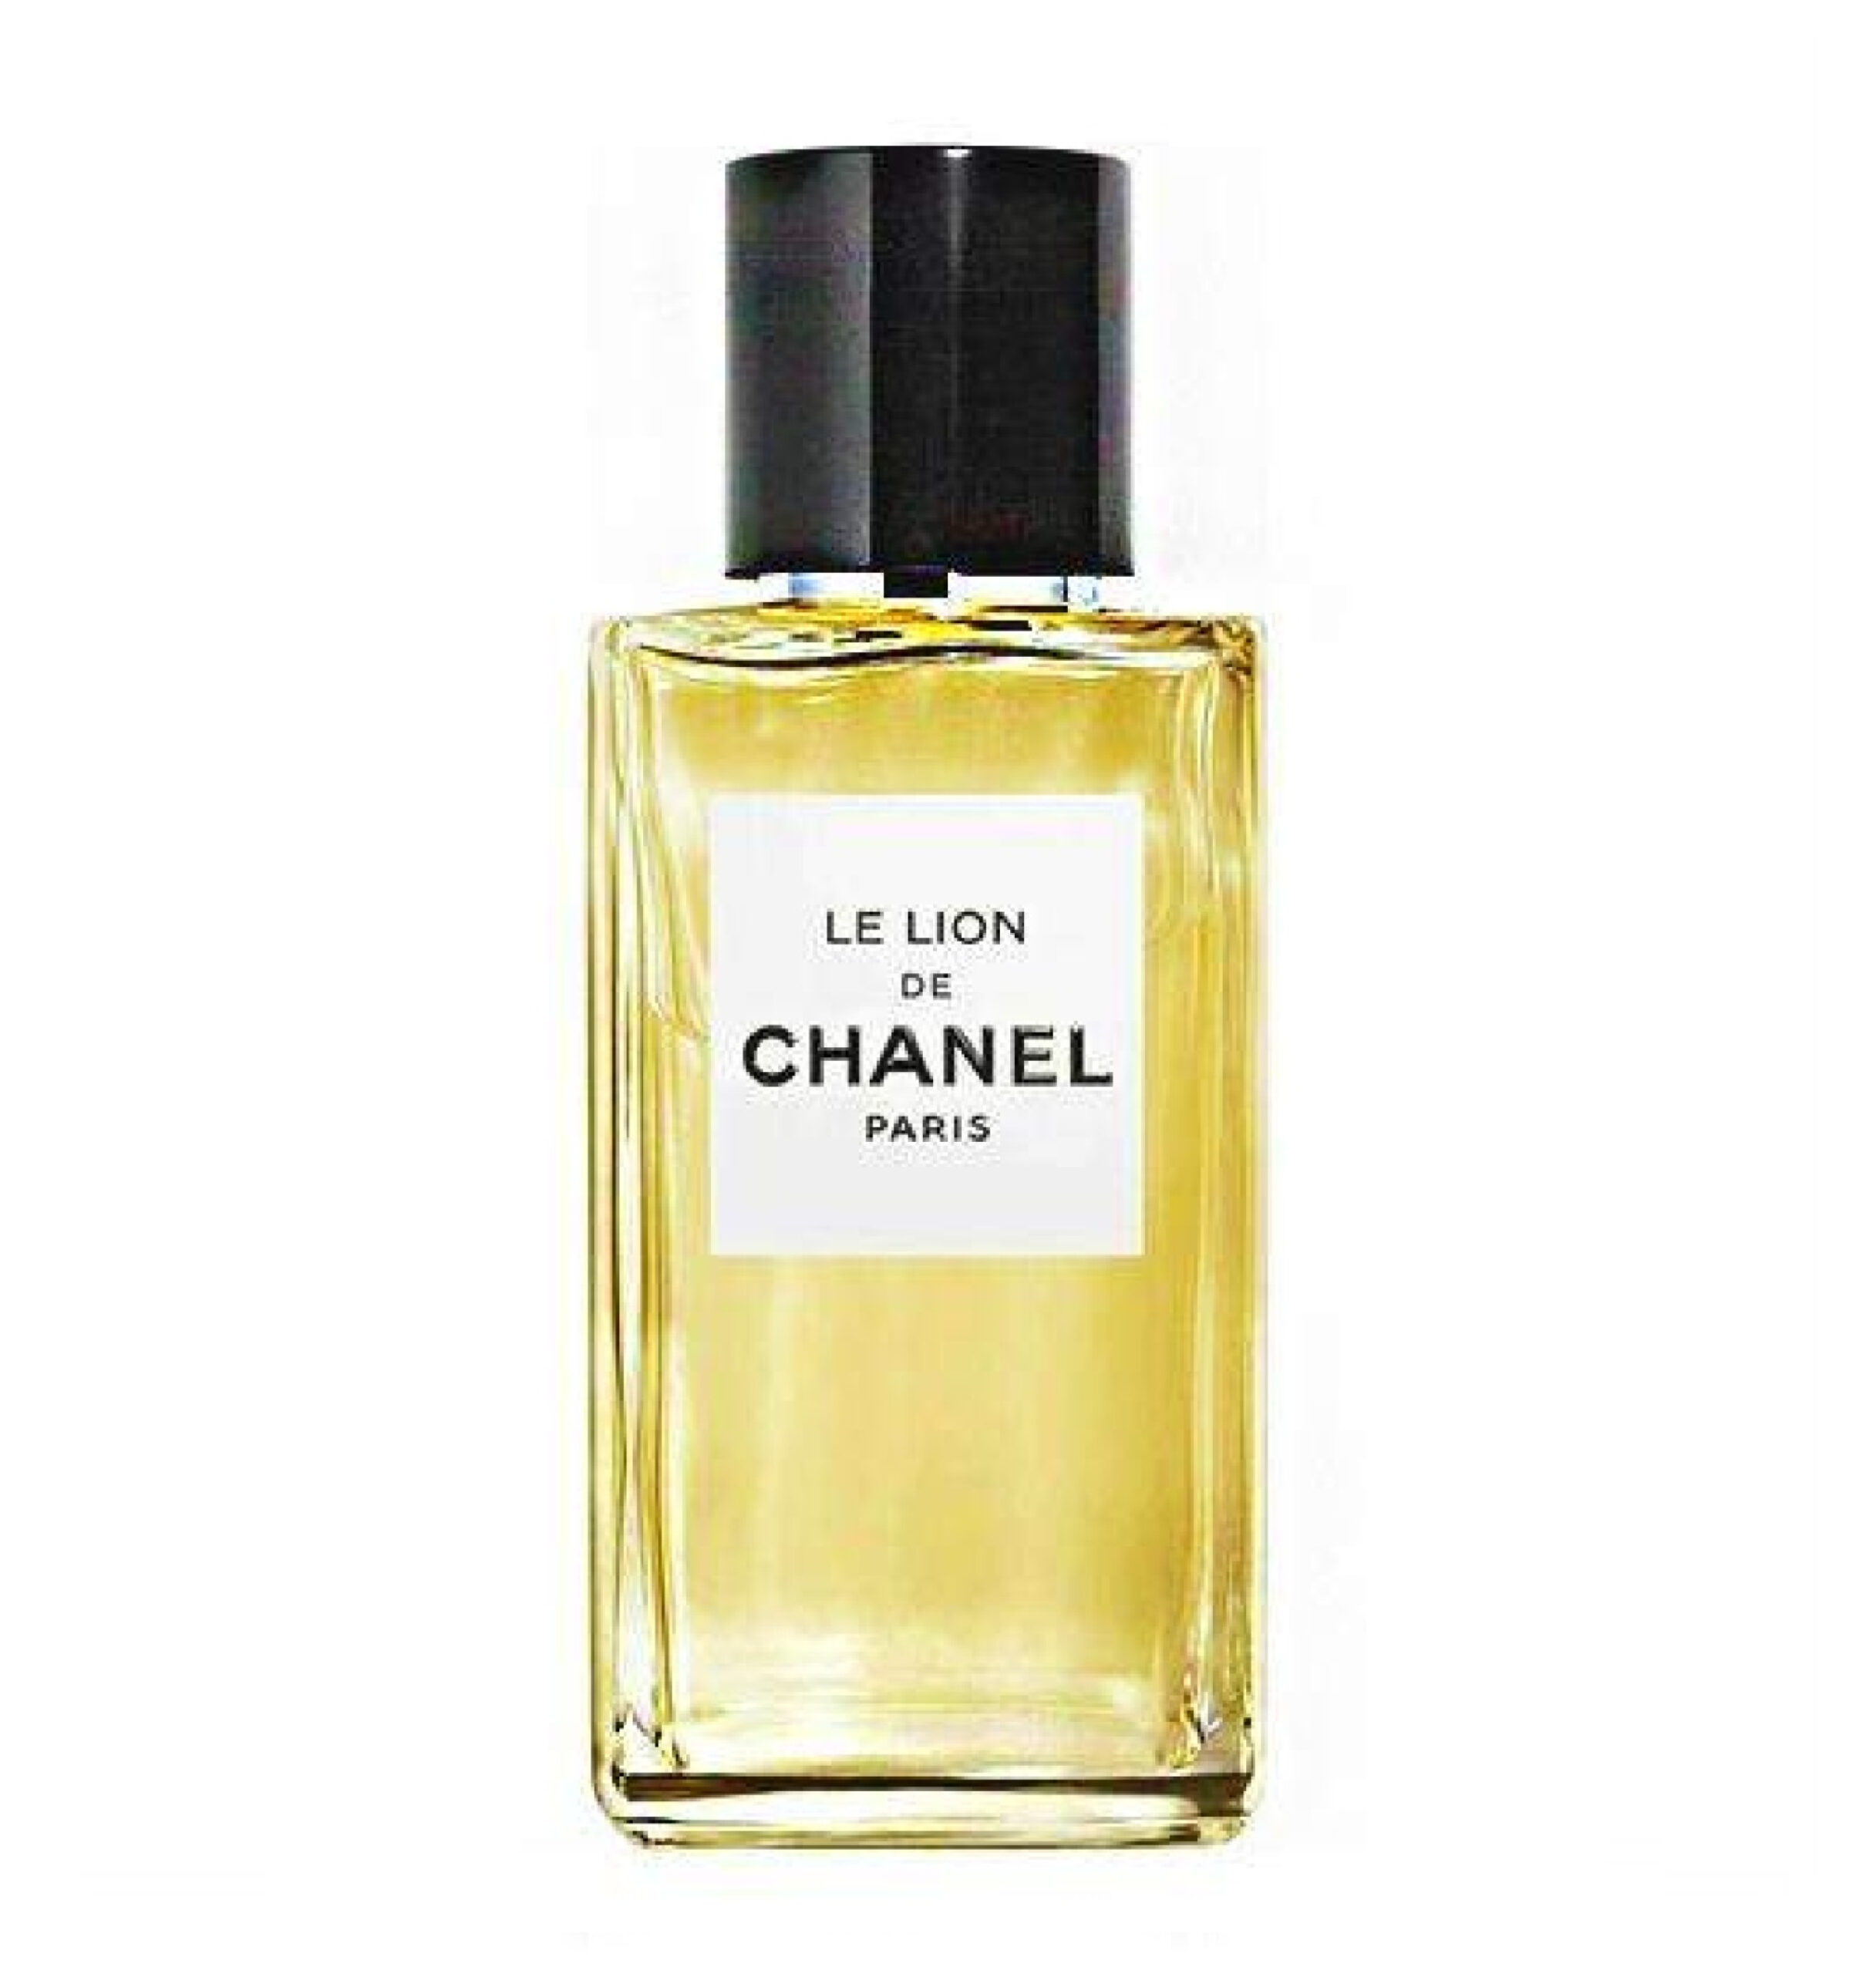 Chanel – Le Lion de Chanel, (シャネル – ル リオン ドゥ シャネル)